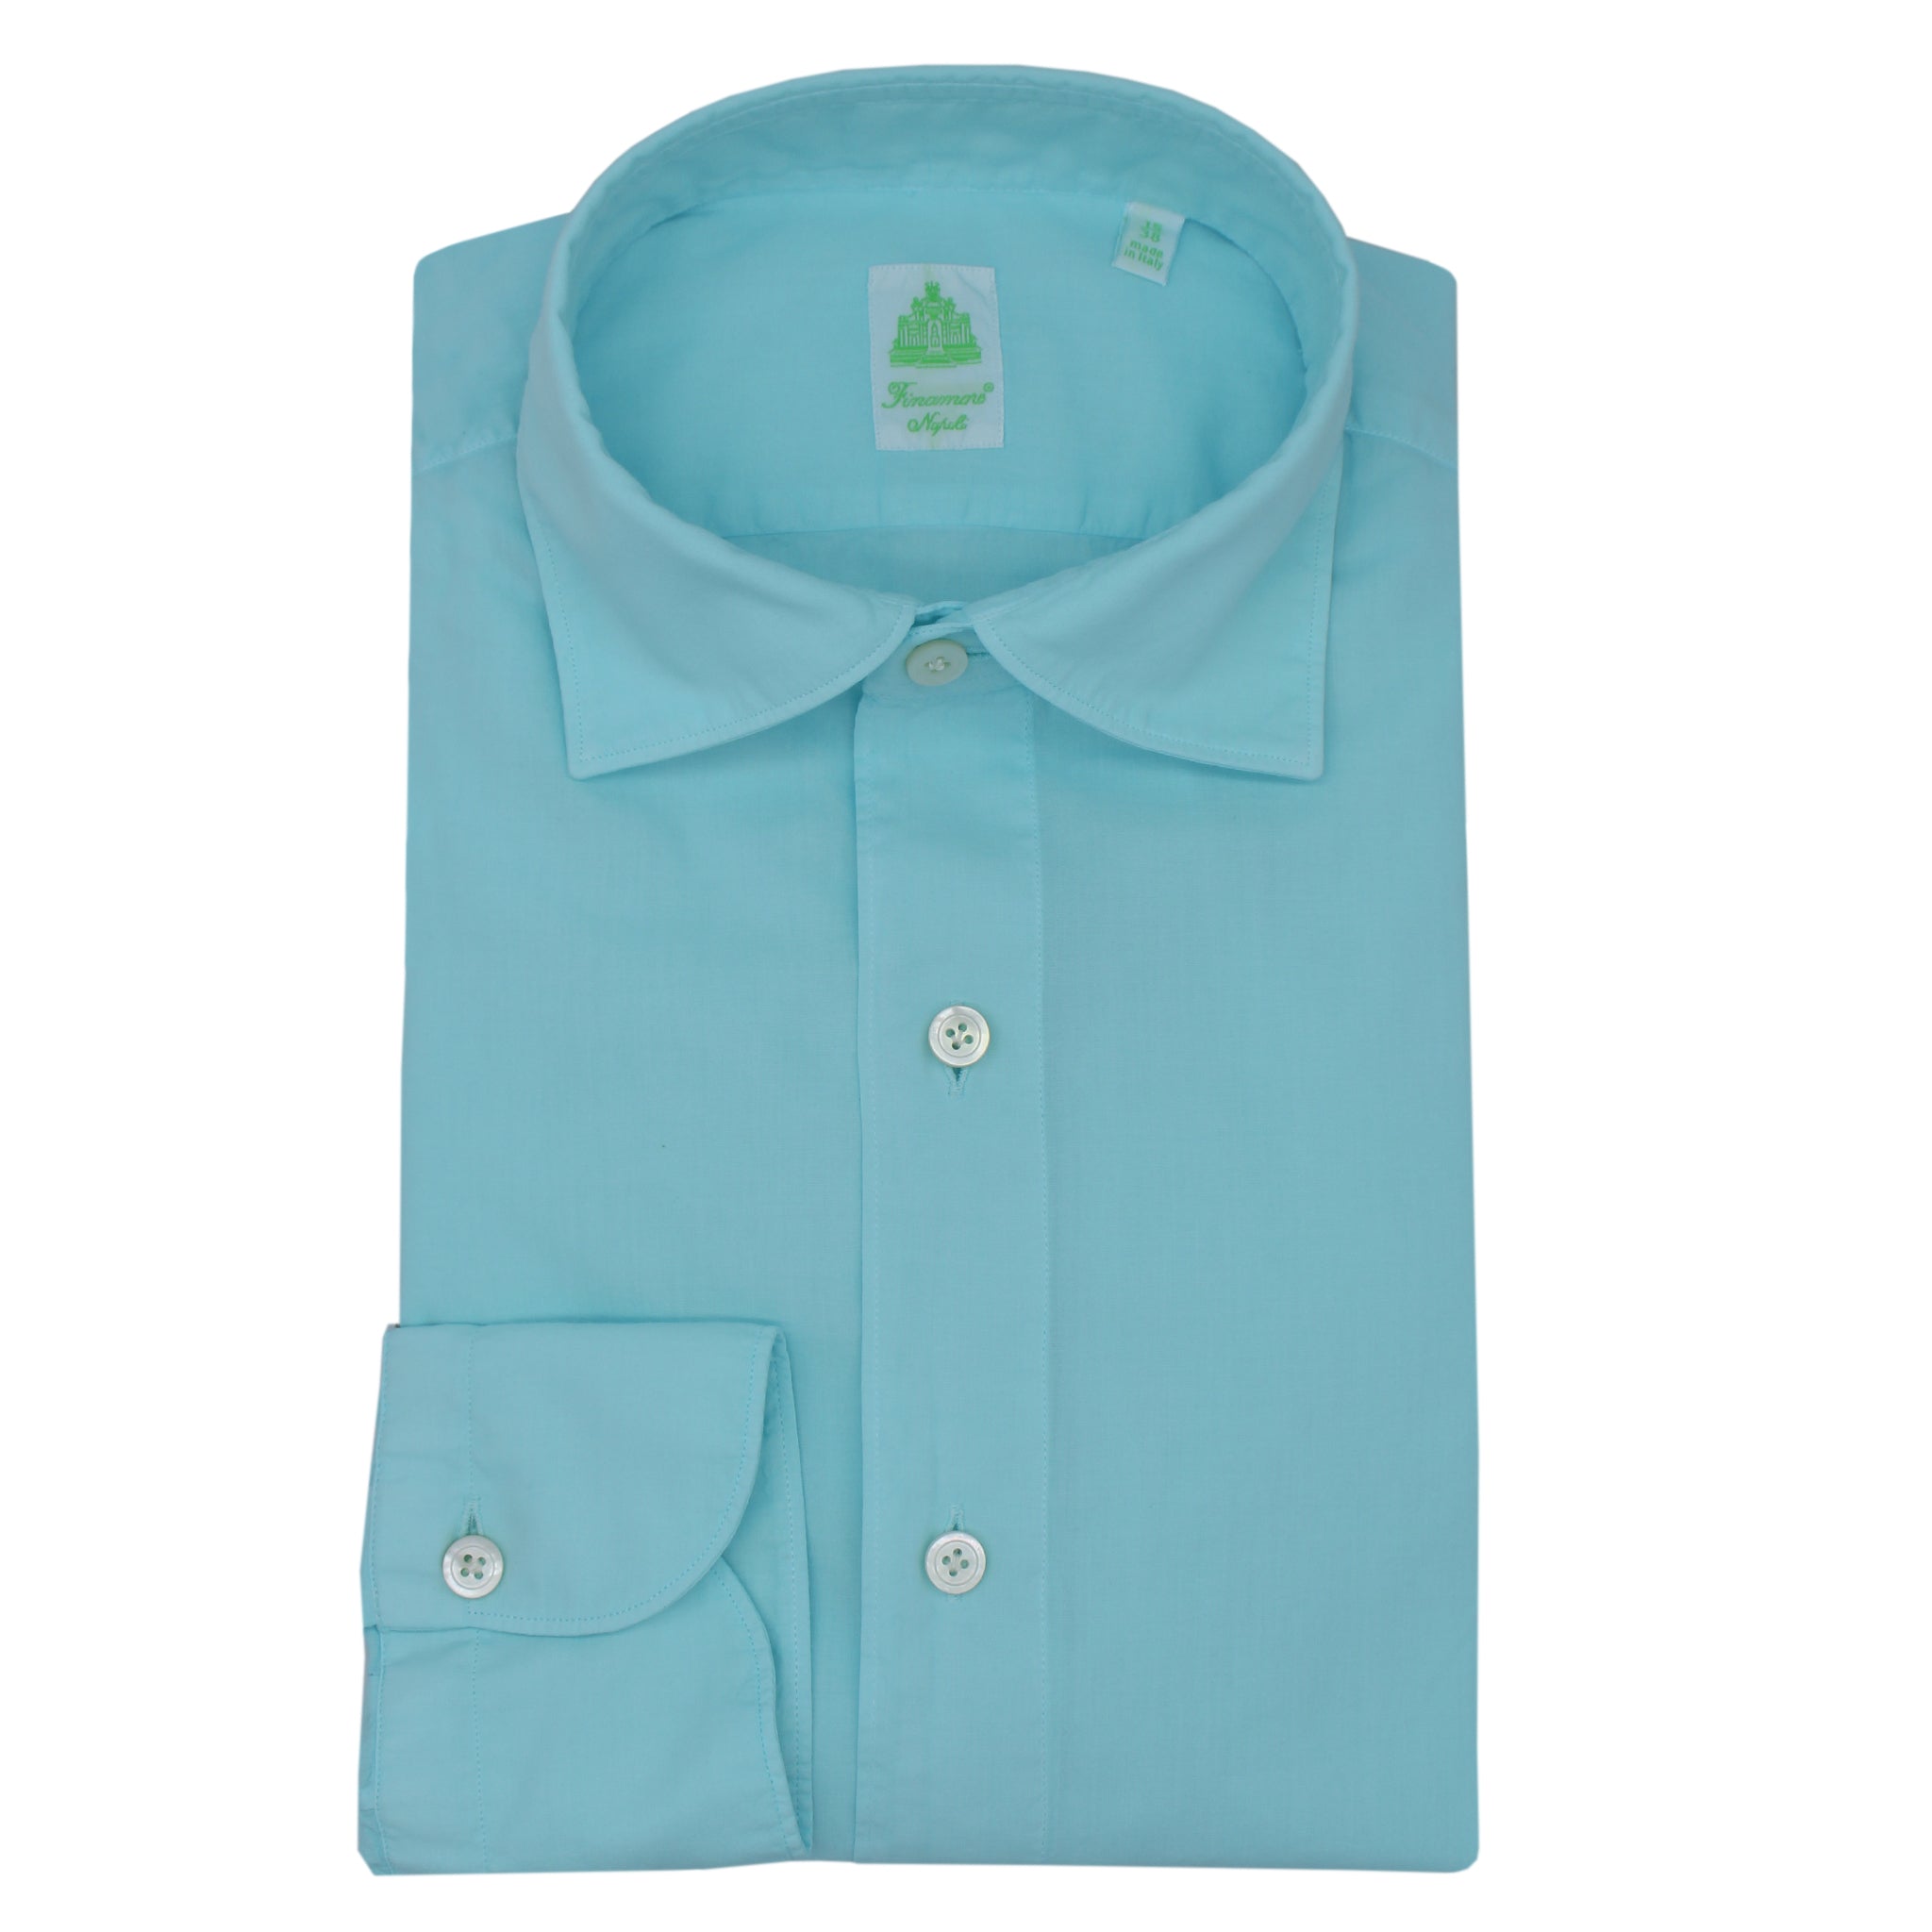 Tokyo slim fit cotton garment dyed light blu shirt